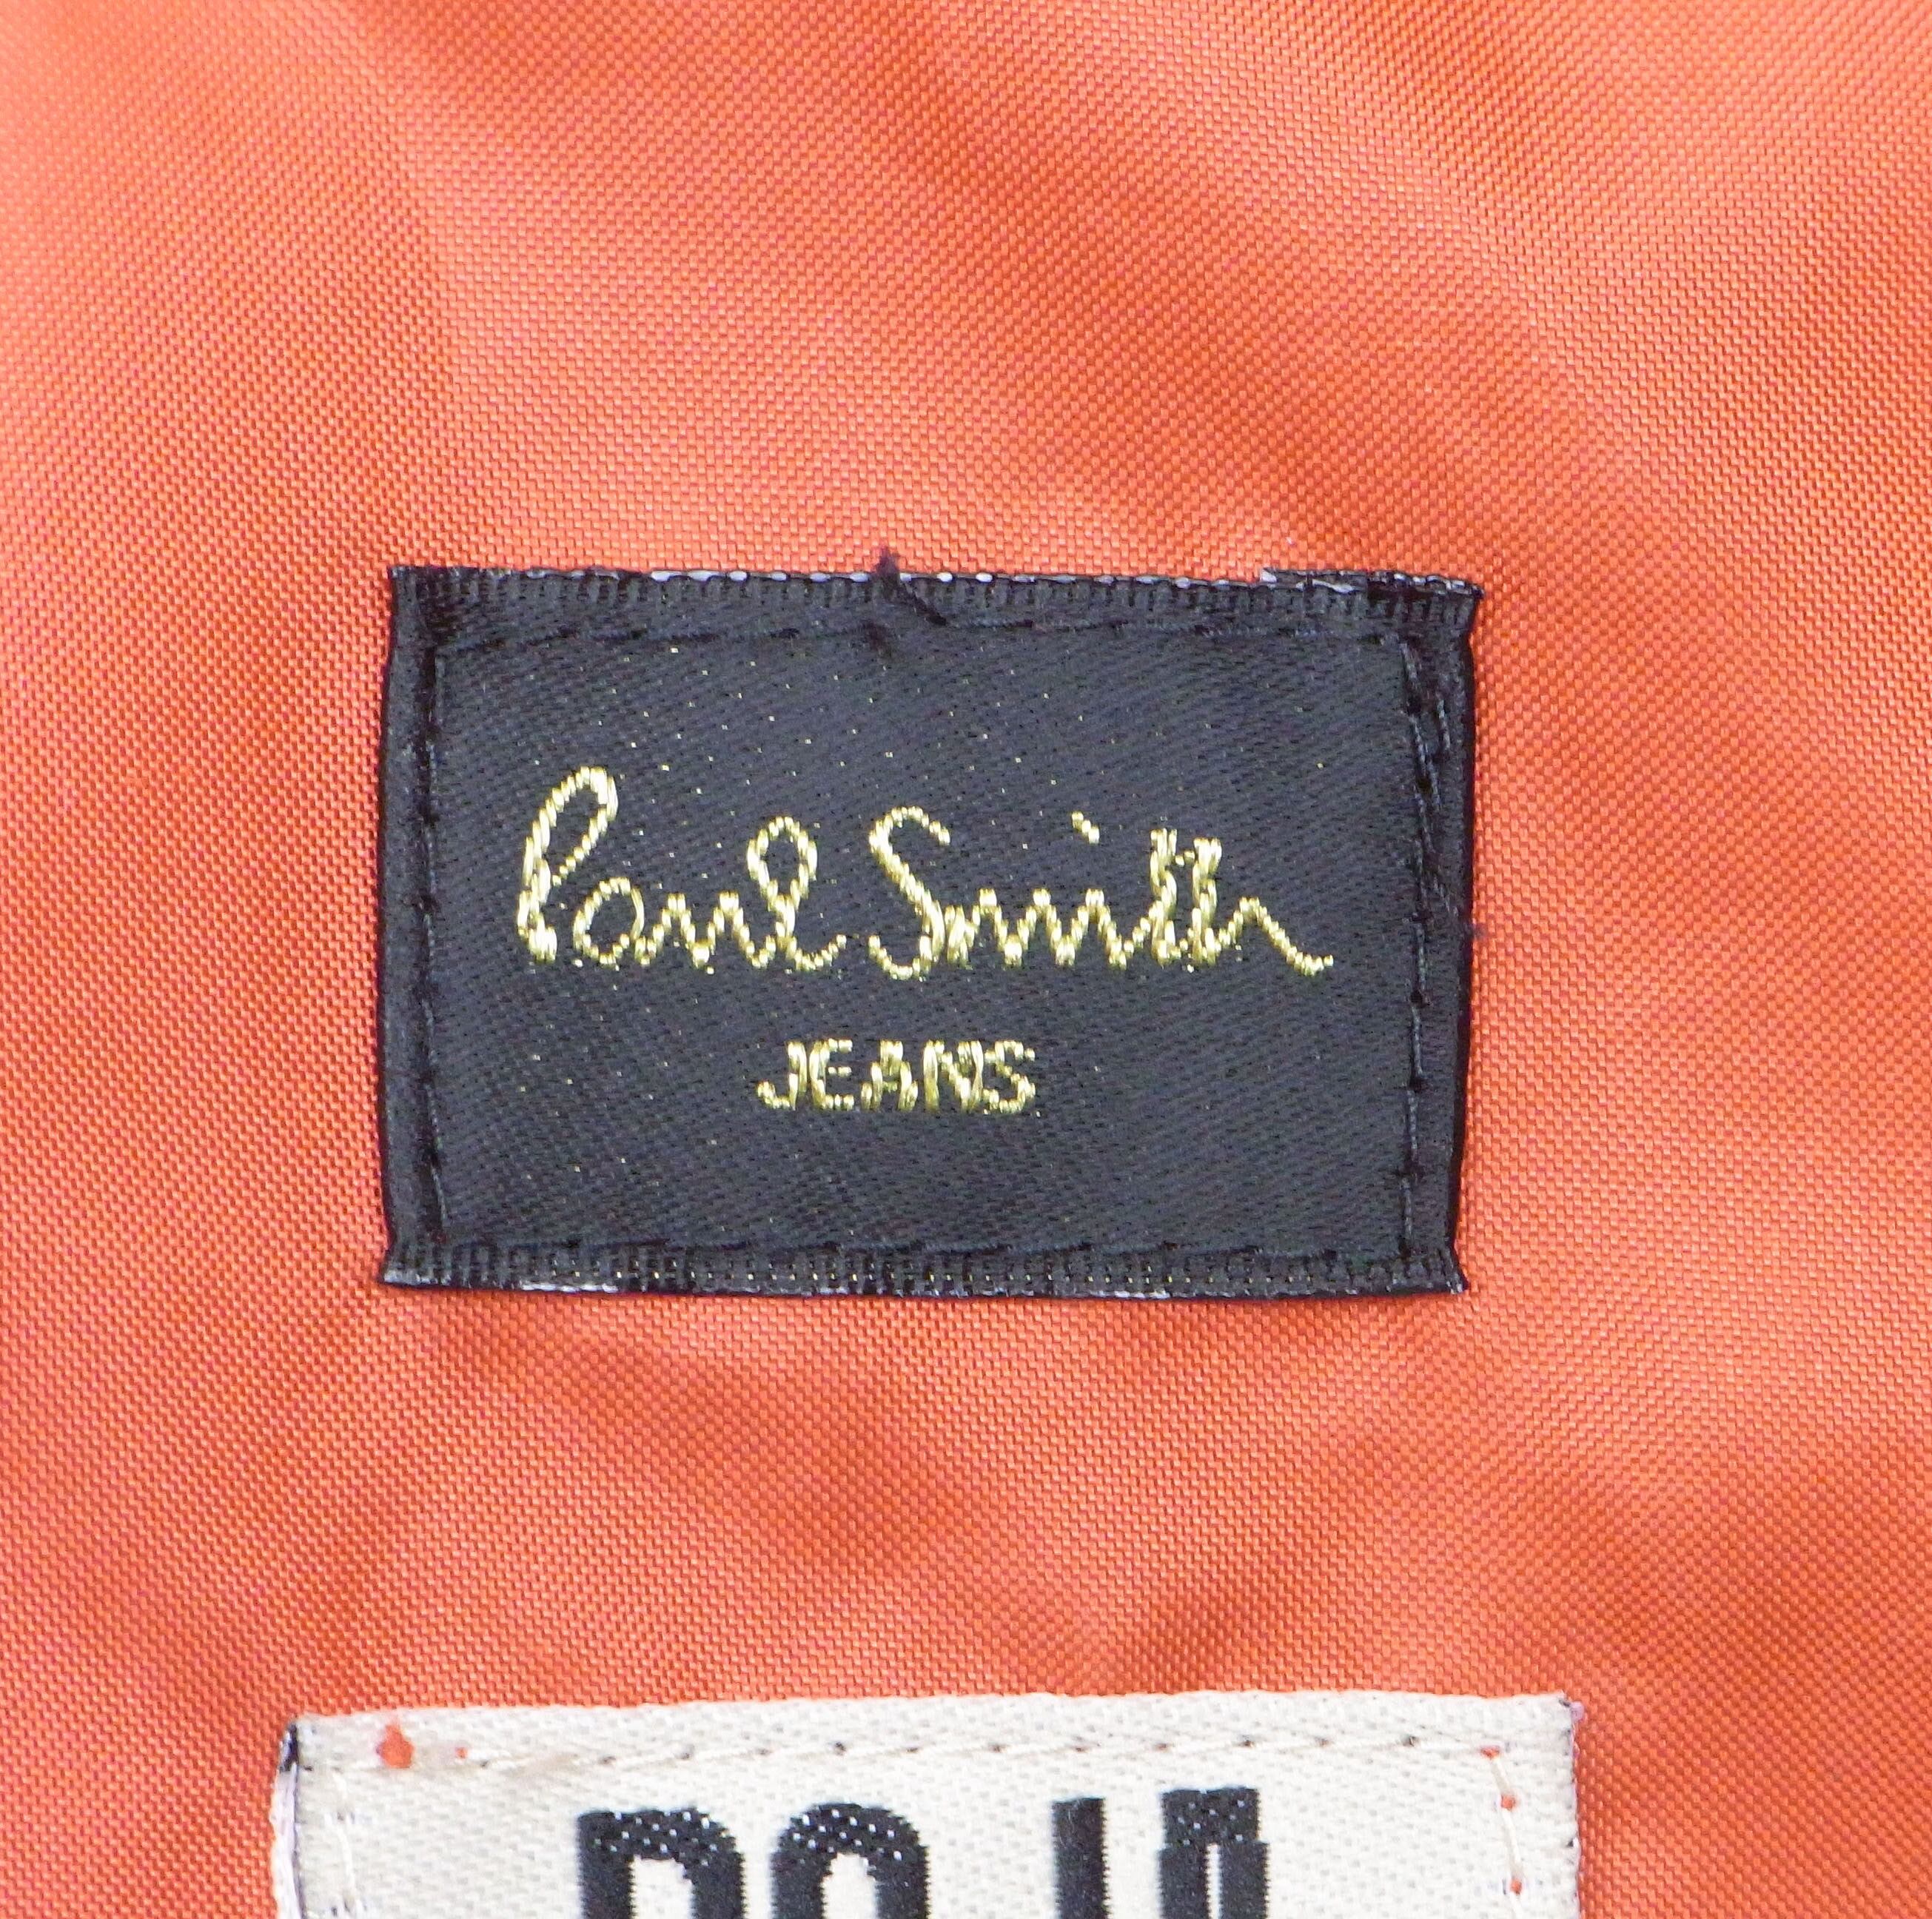 Paul Smith Jeans wind Jacket